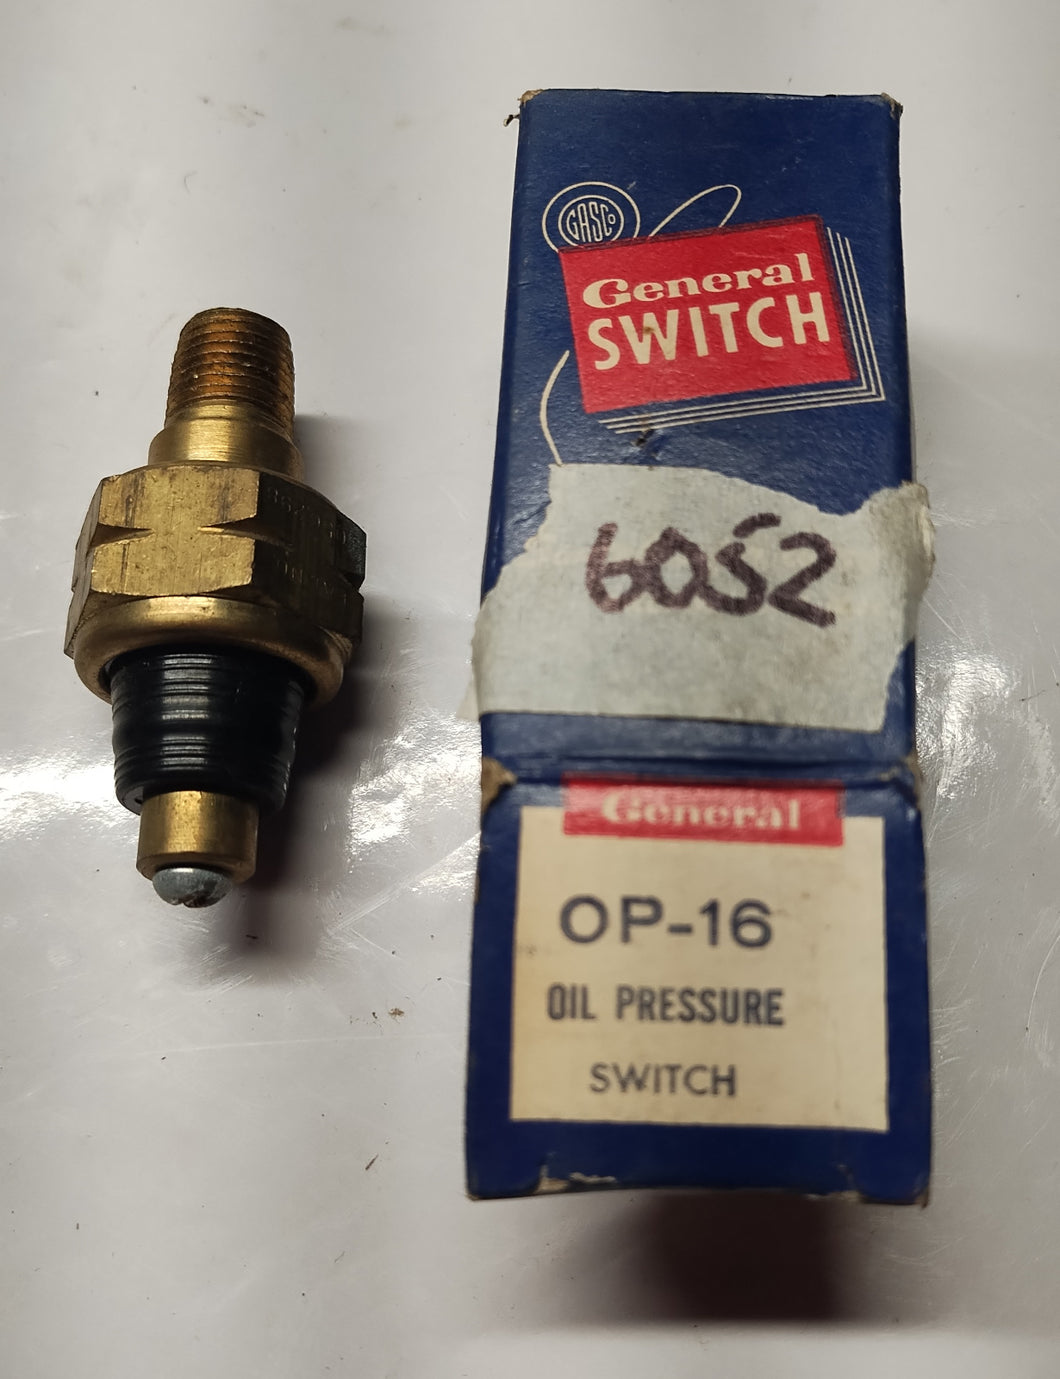 General Switch oil pressure switch